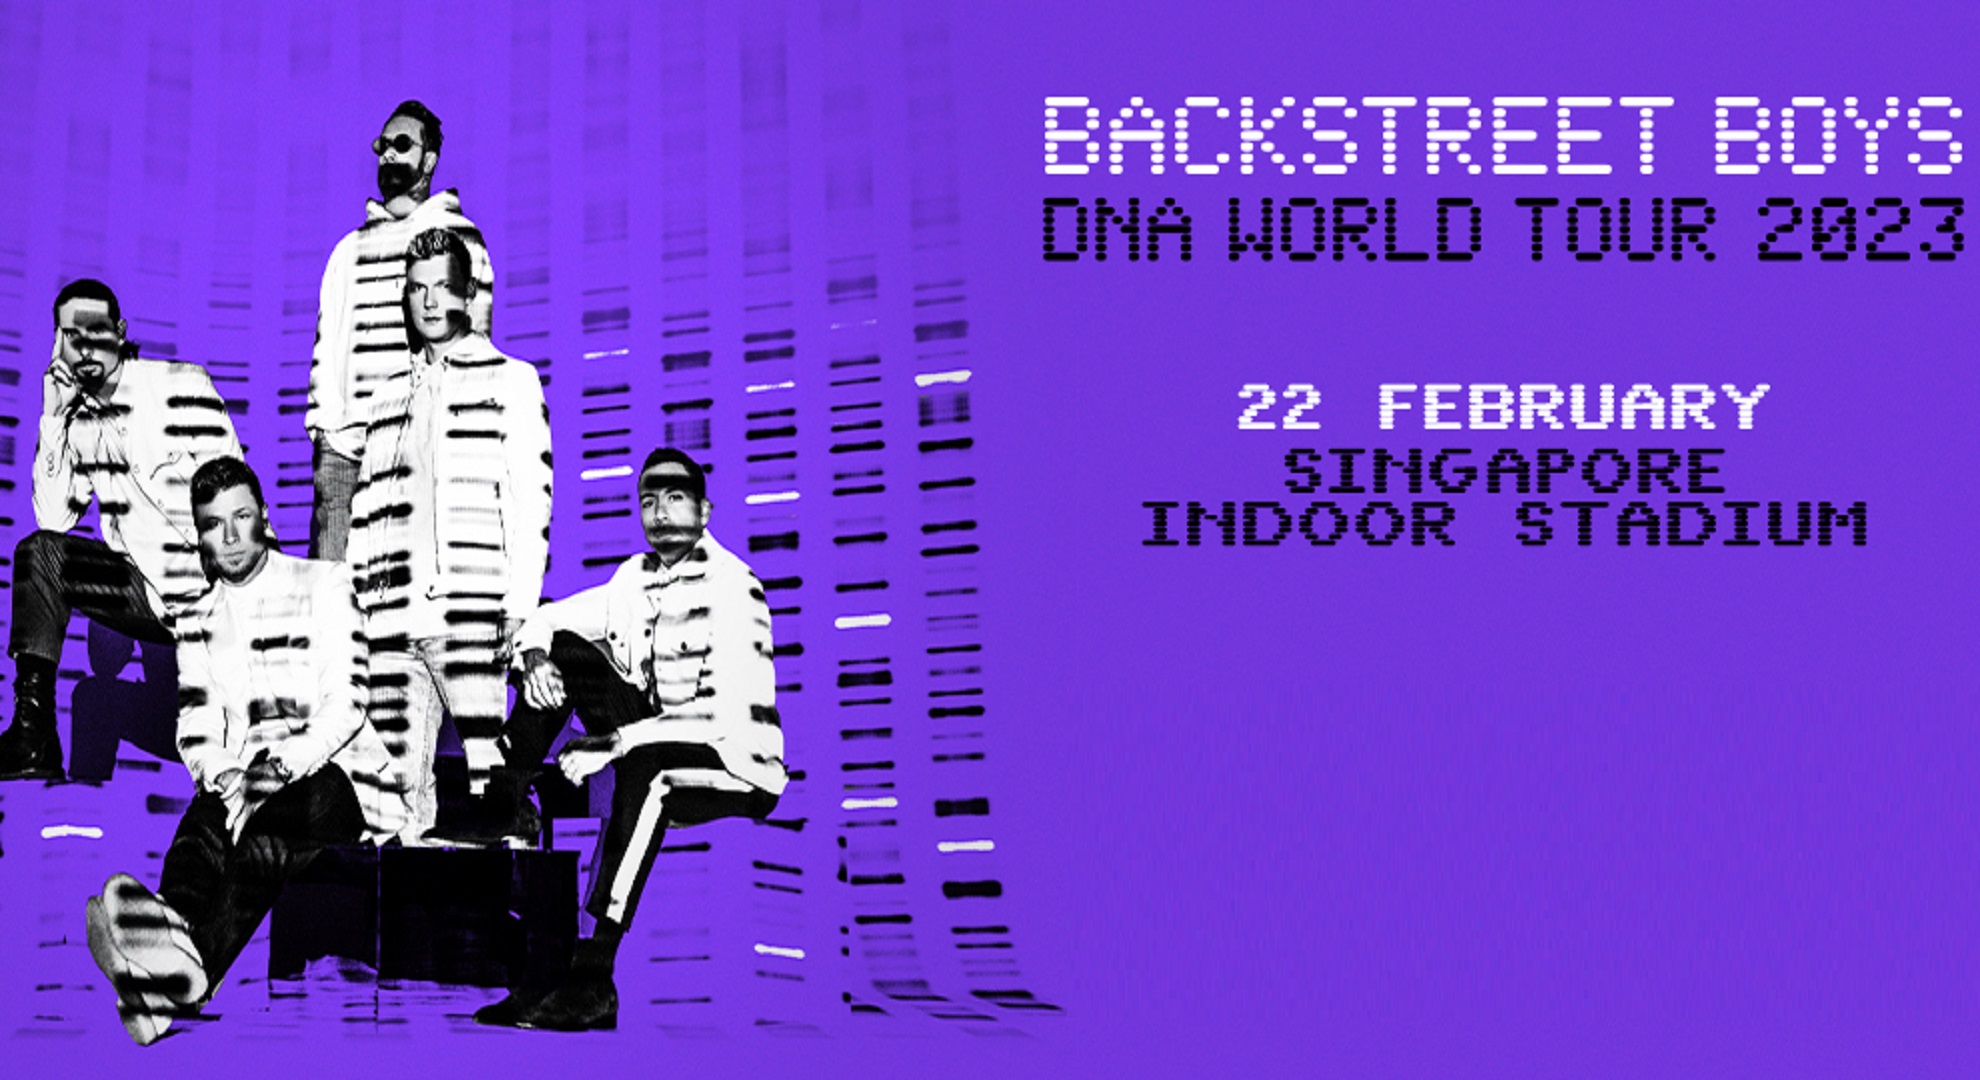 Singapore Backstreet Boys DNA Tour